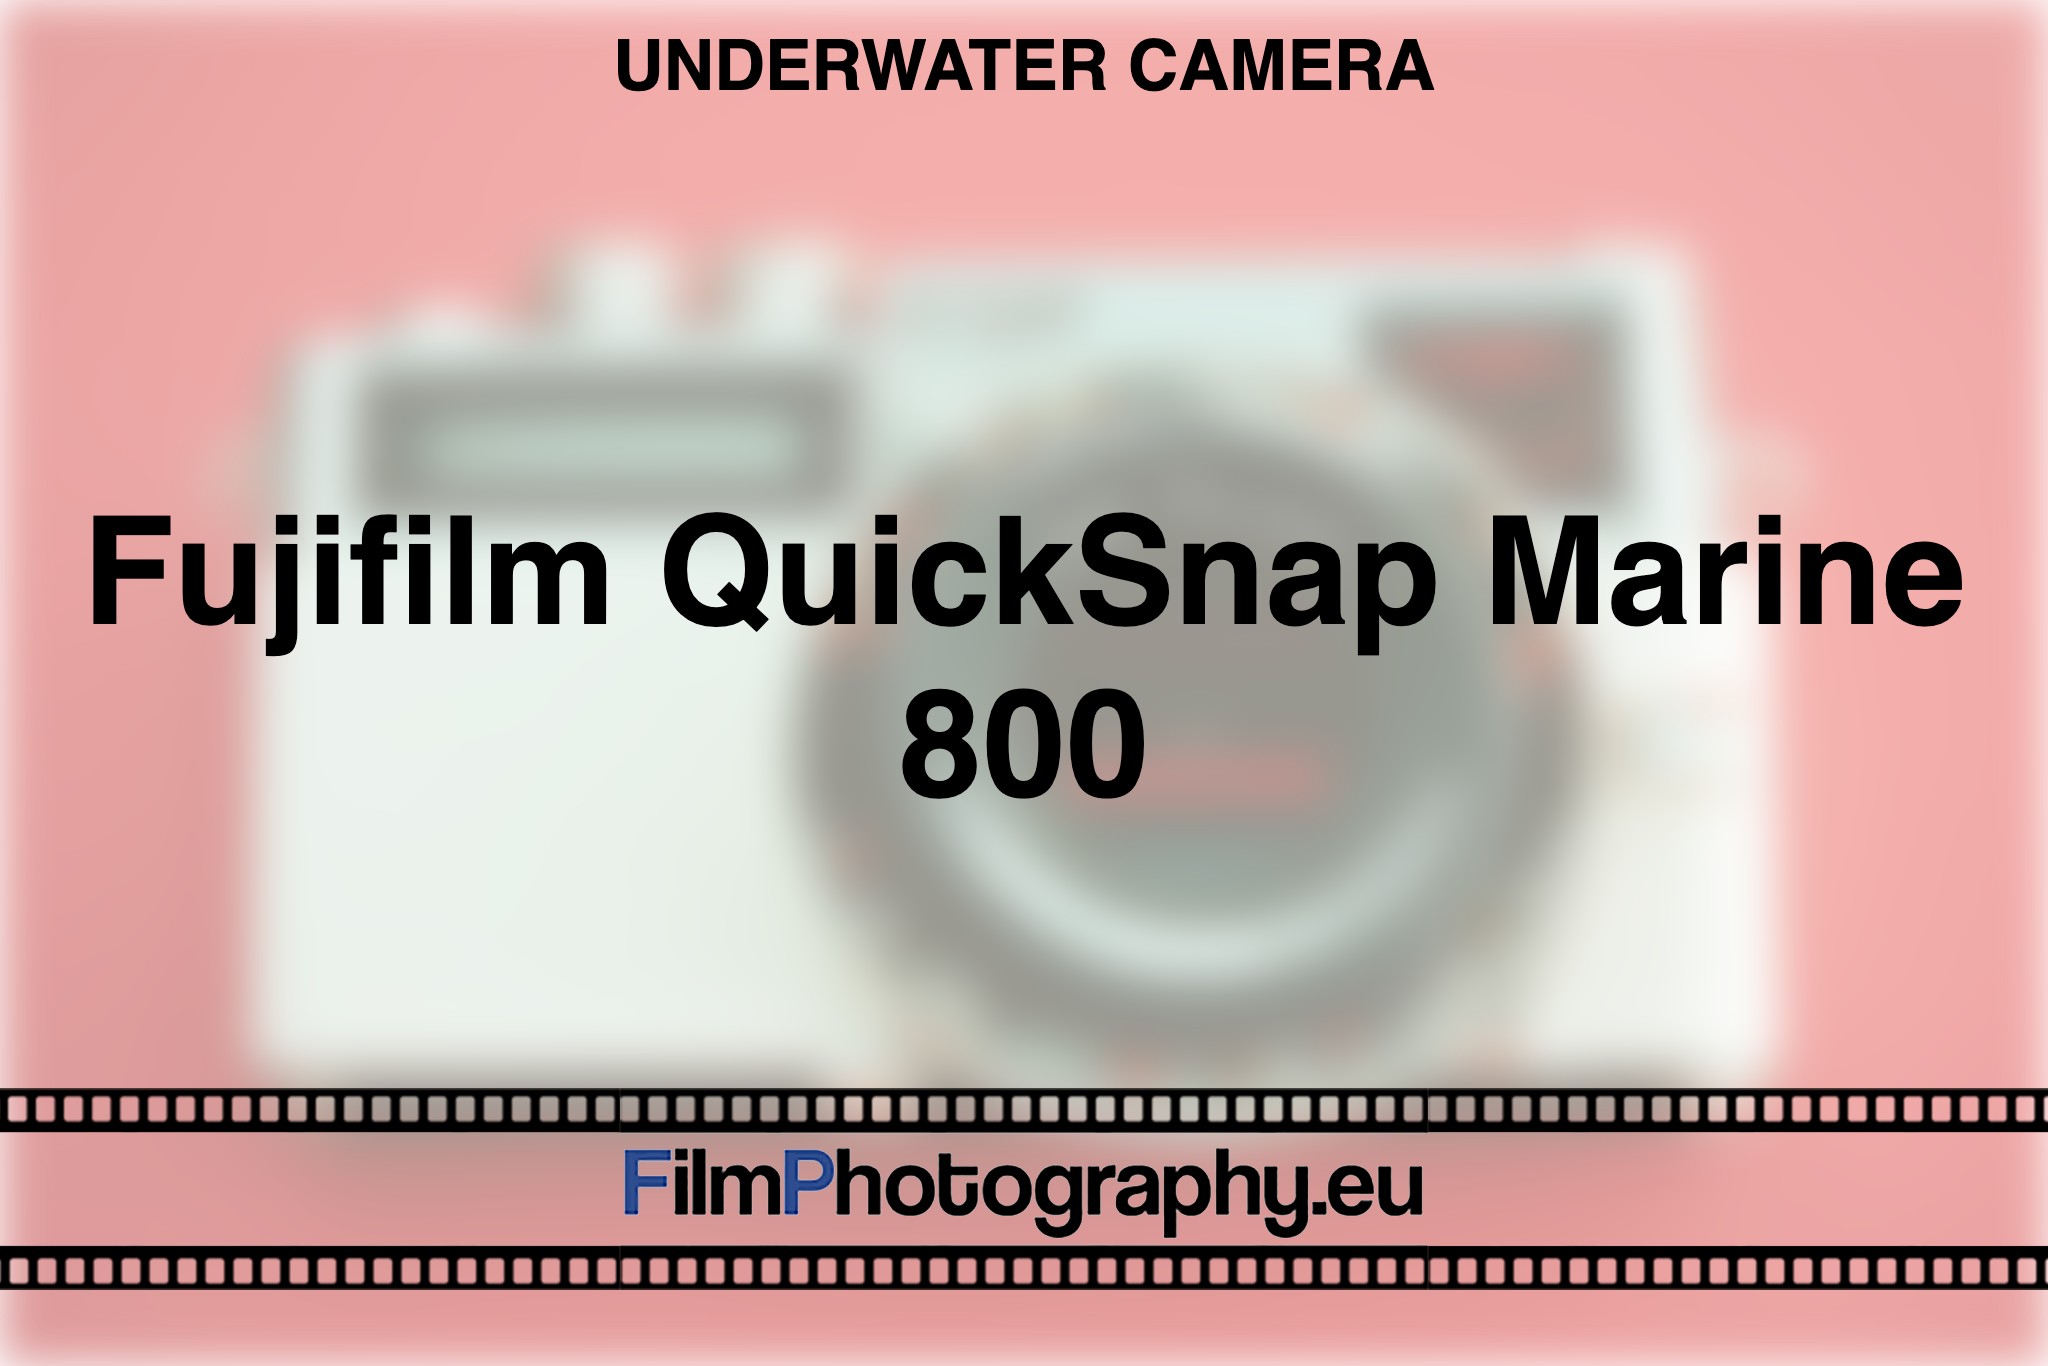 fujifilm-quicksnap-marine-800-underwater-camera-bnv